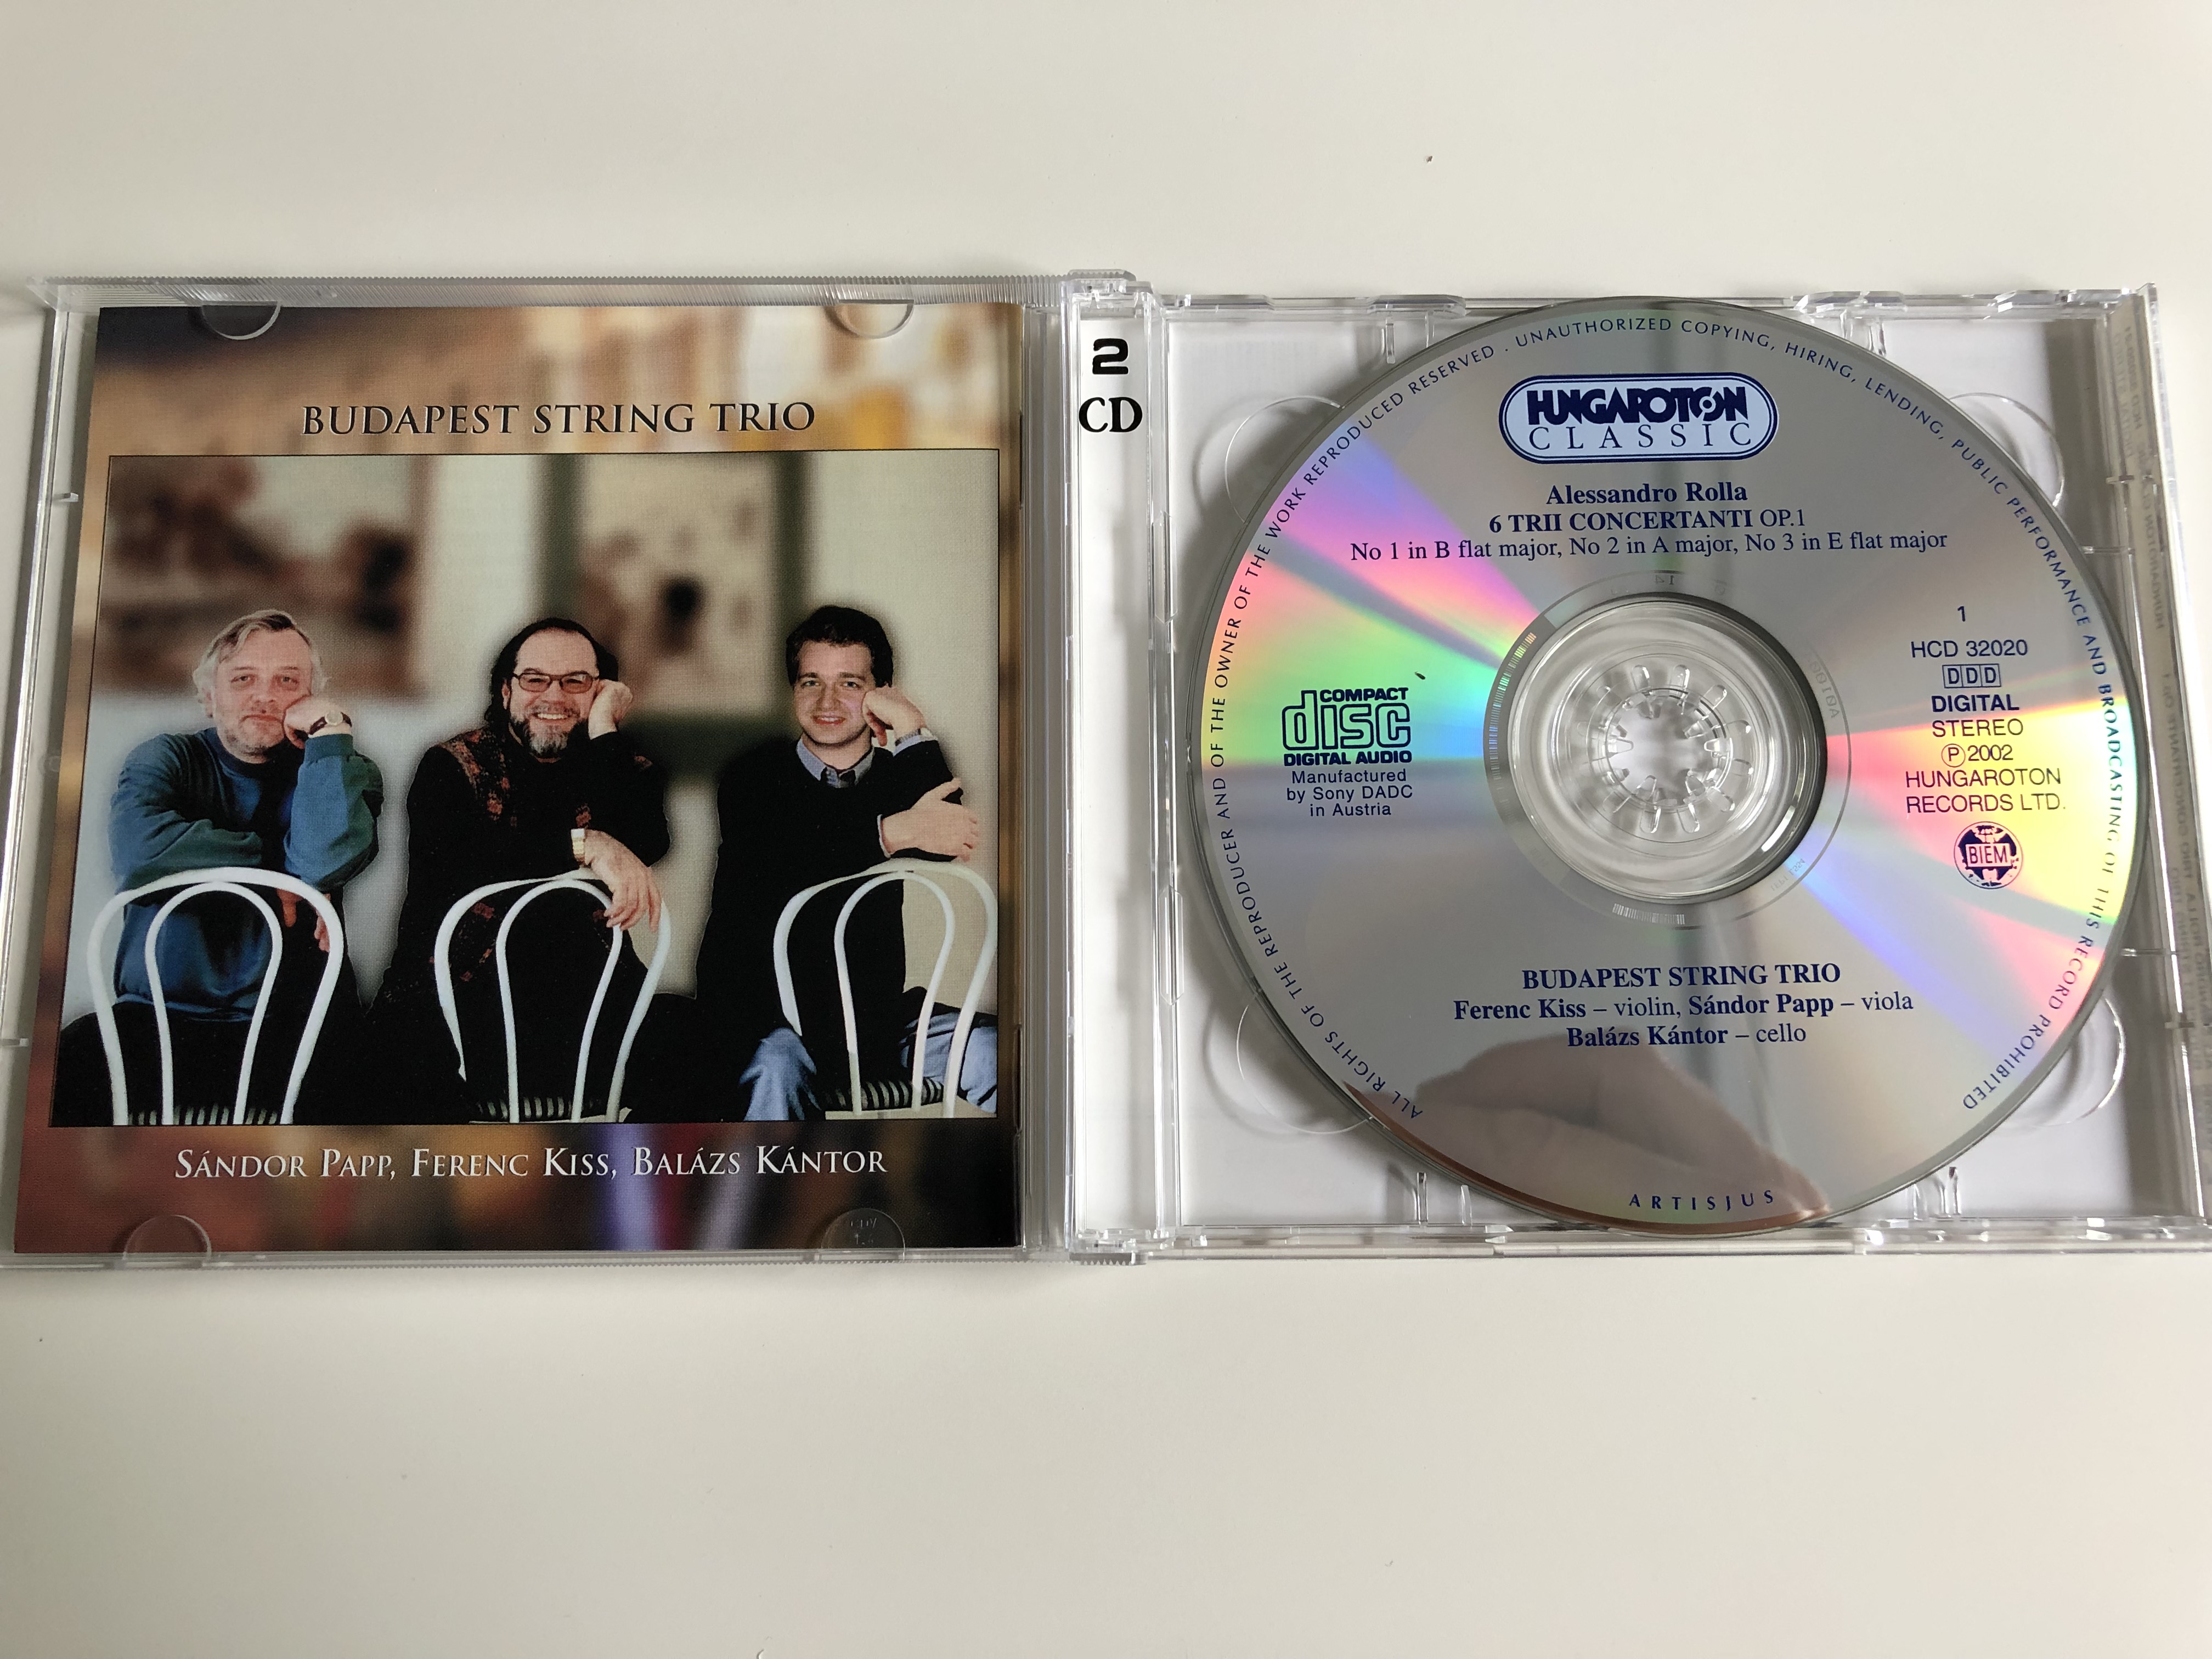 alessandro-rolla-trio-concertante-op.-1-complete-audio-cd-set-2002-budapest-string-trio-ferenc-kiss-violin-s-ndor-papp-viola-bal-zs-k-ntor-cello-hungaroton-classic-hcd-32020-21-6-.jpg